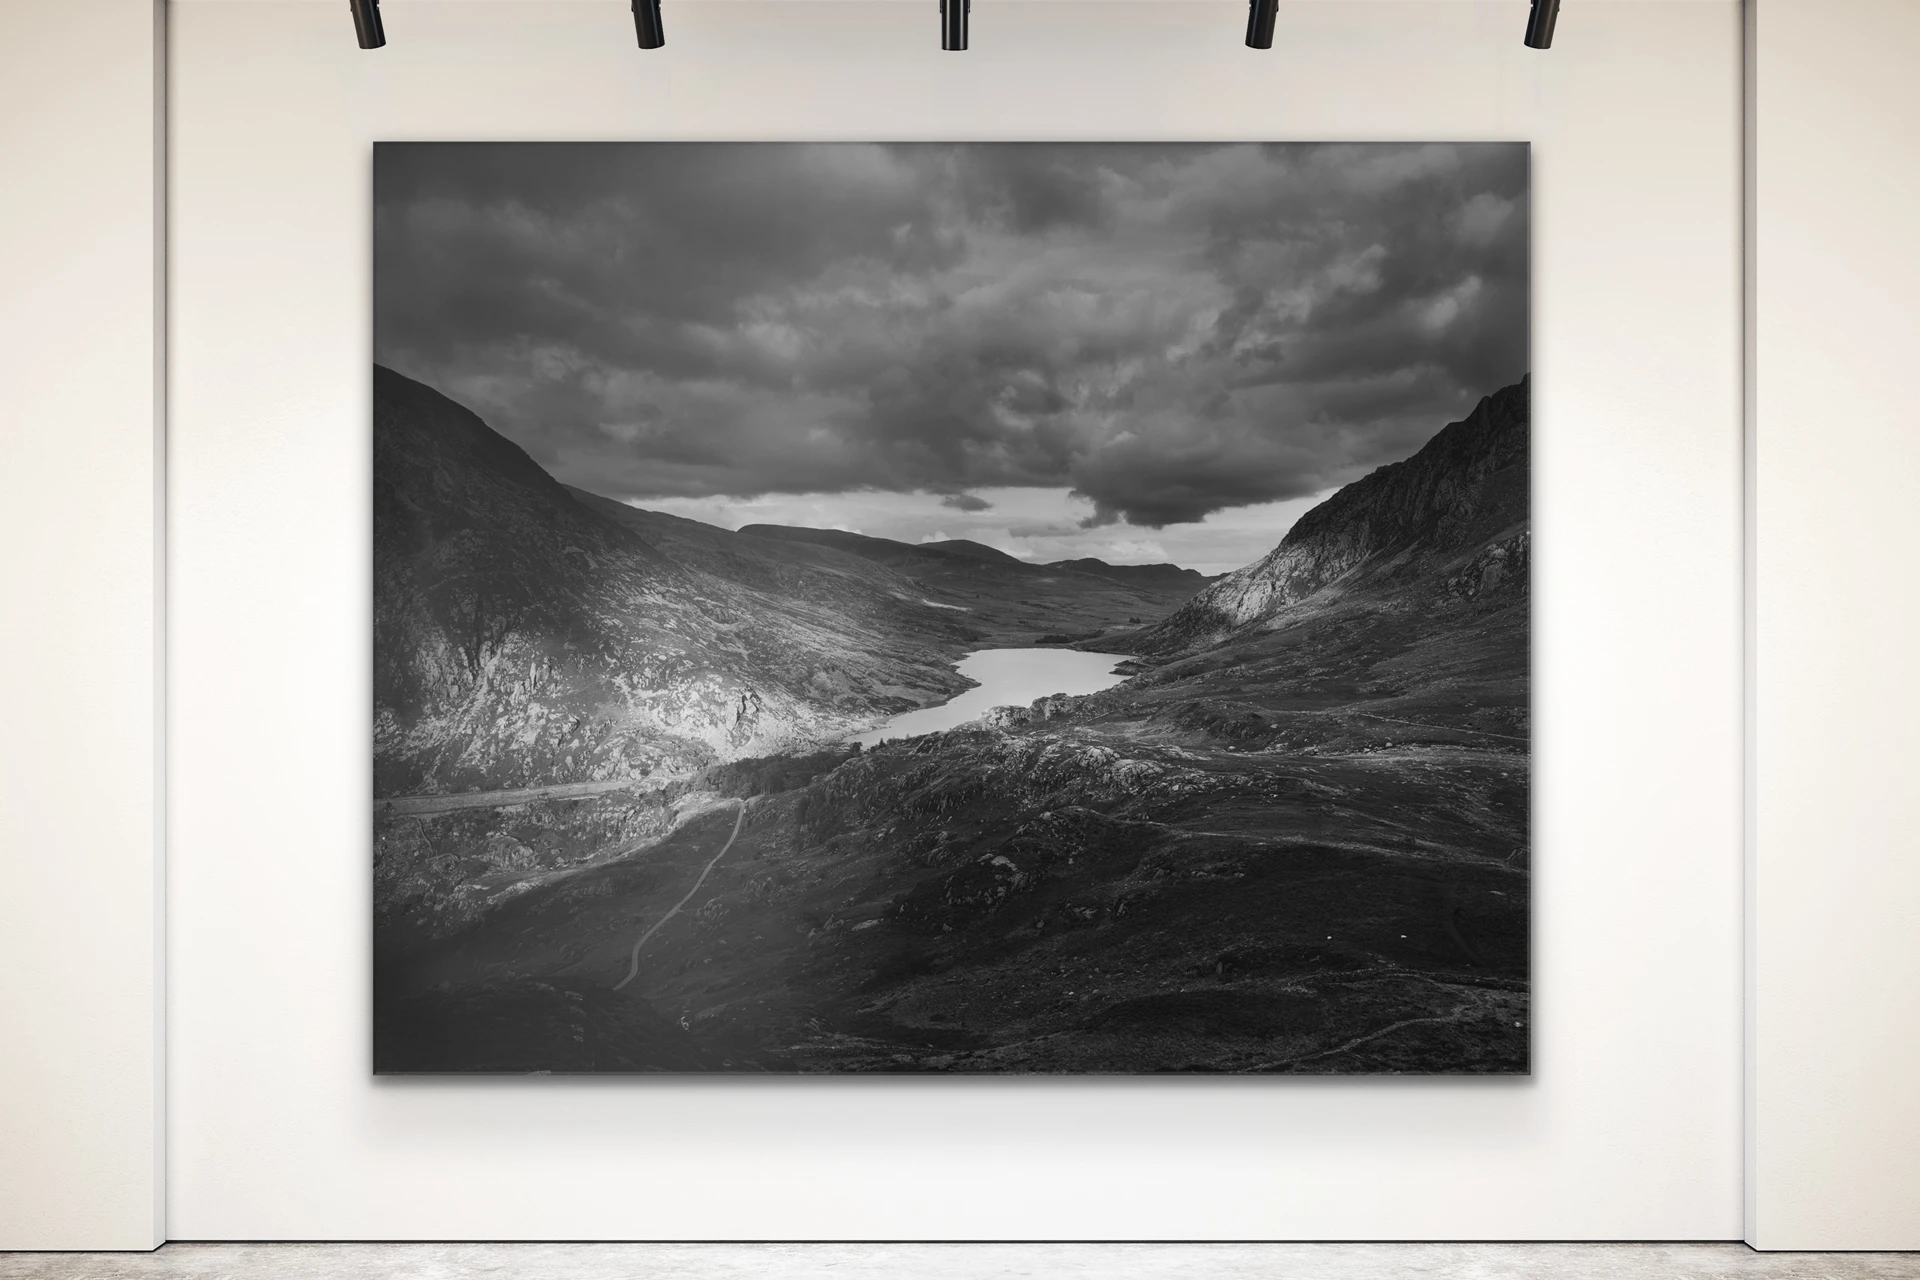 Landscape photo in black & white by Natalie Oberg.